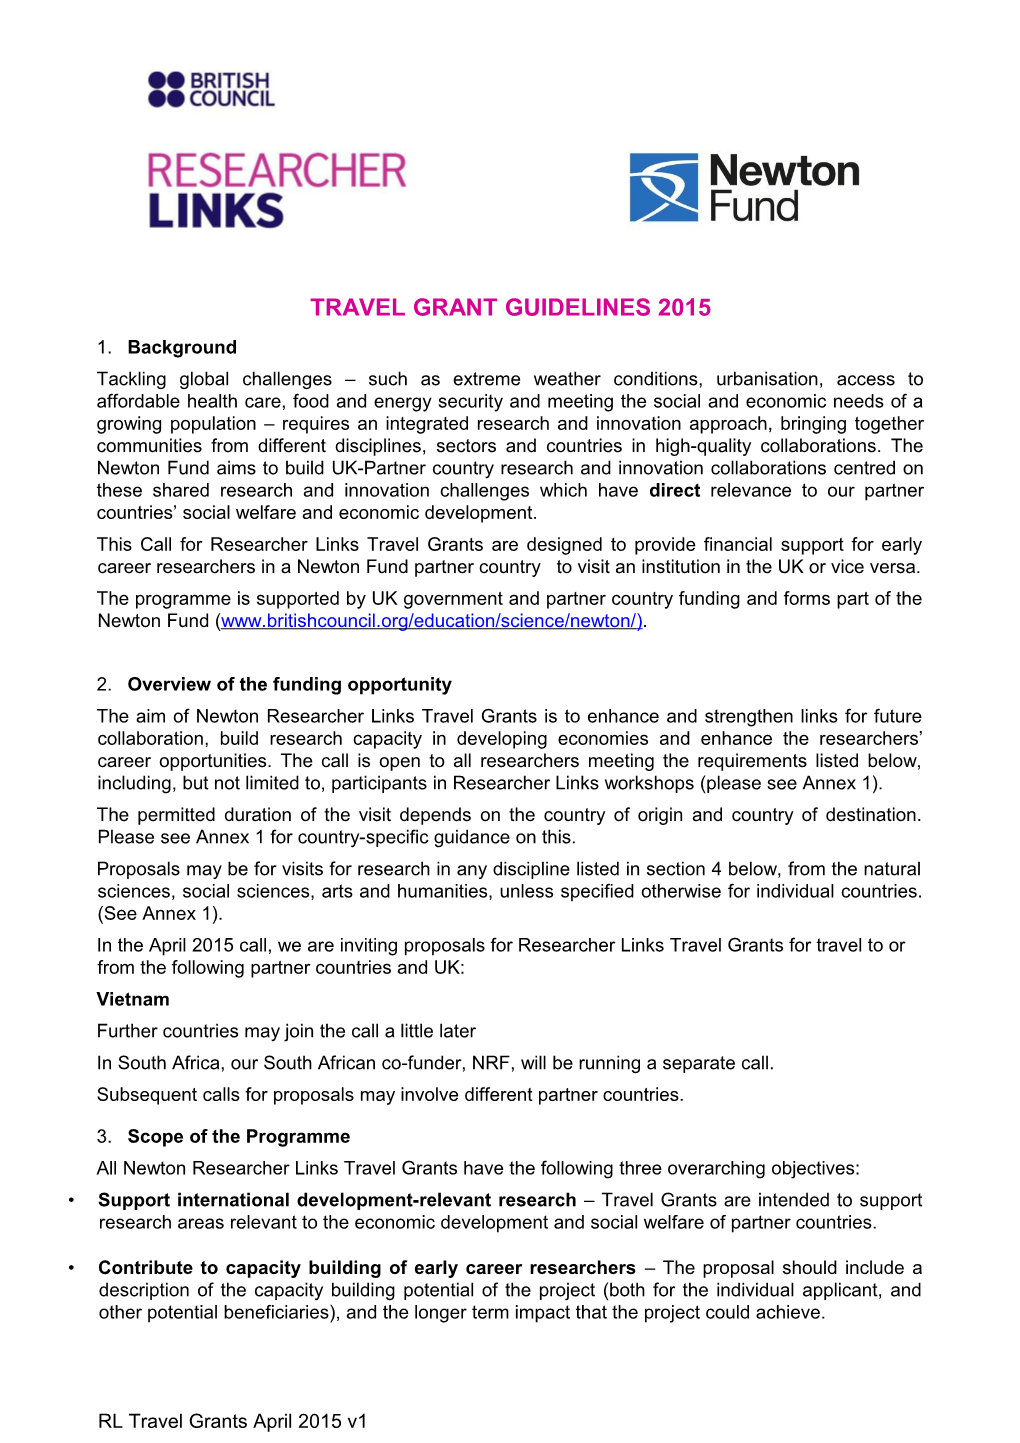 Travel Grant Guidelines Draft